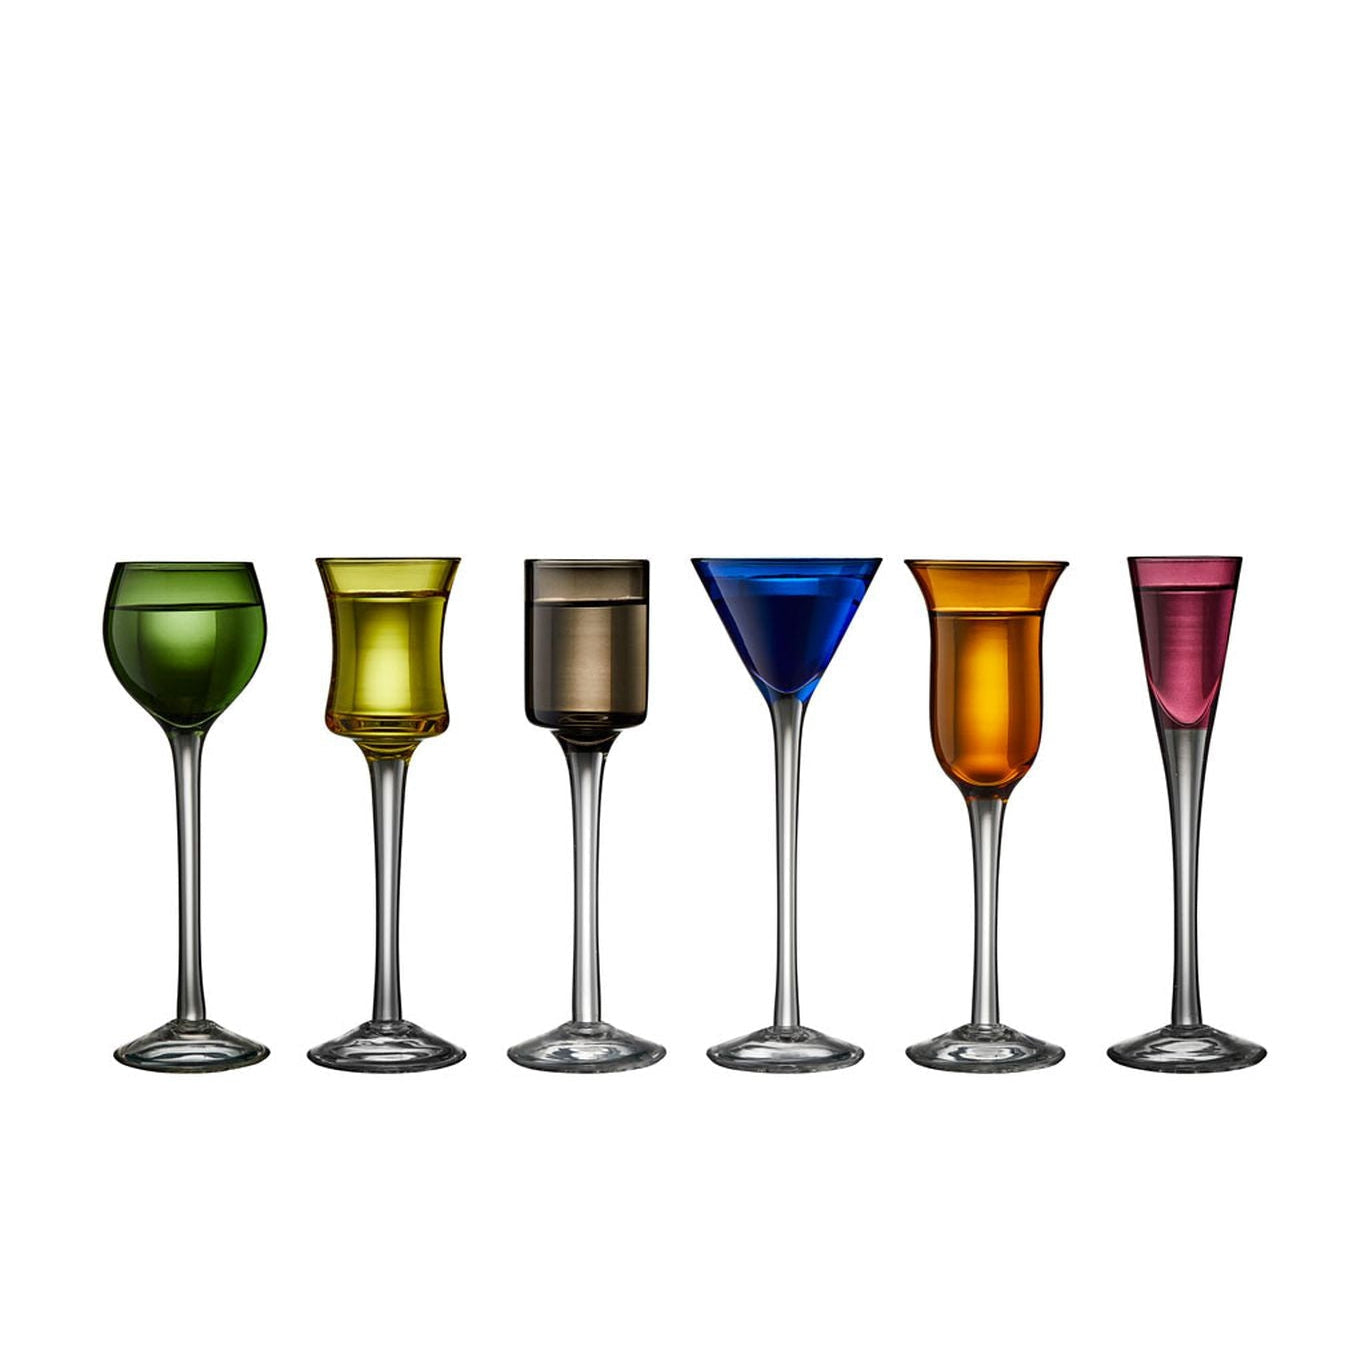 Lyngby Glas Schnapps Glass forskellige farver, 6 stk.